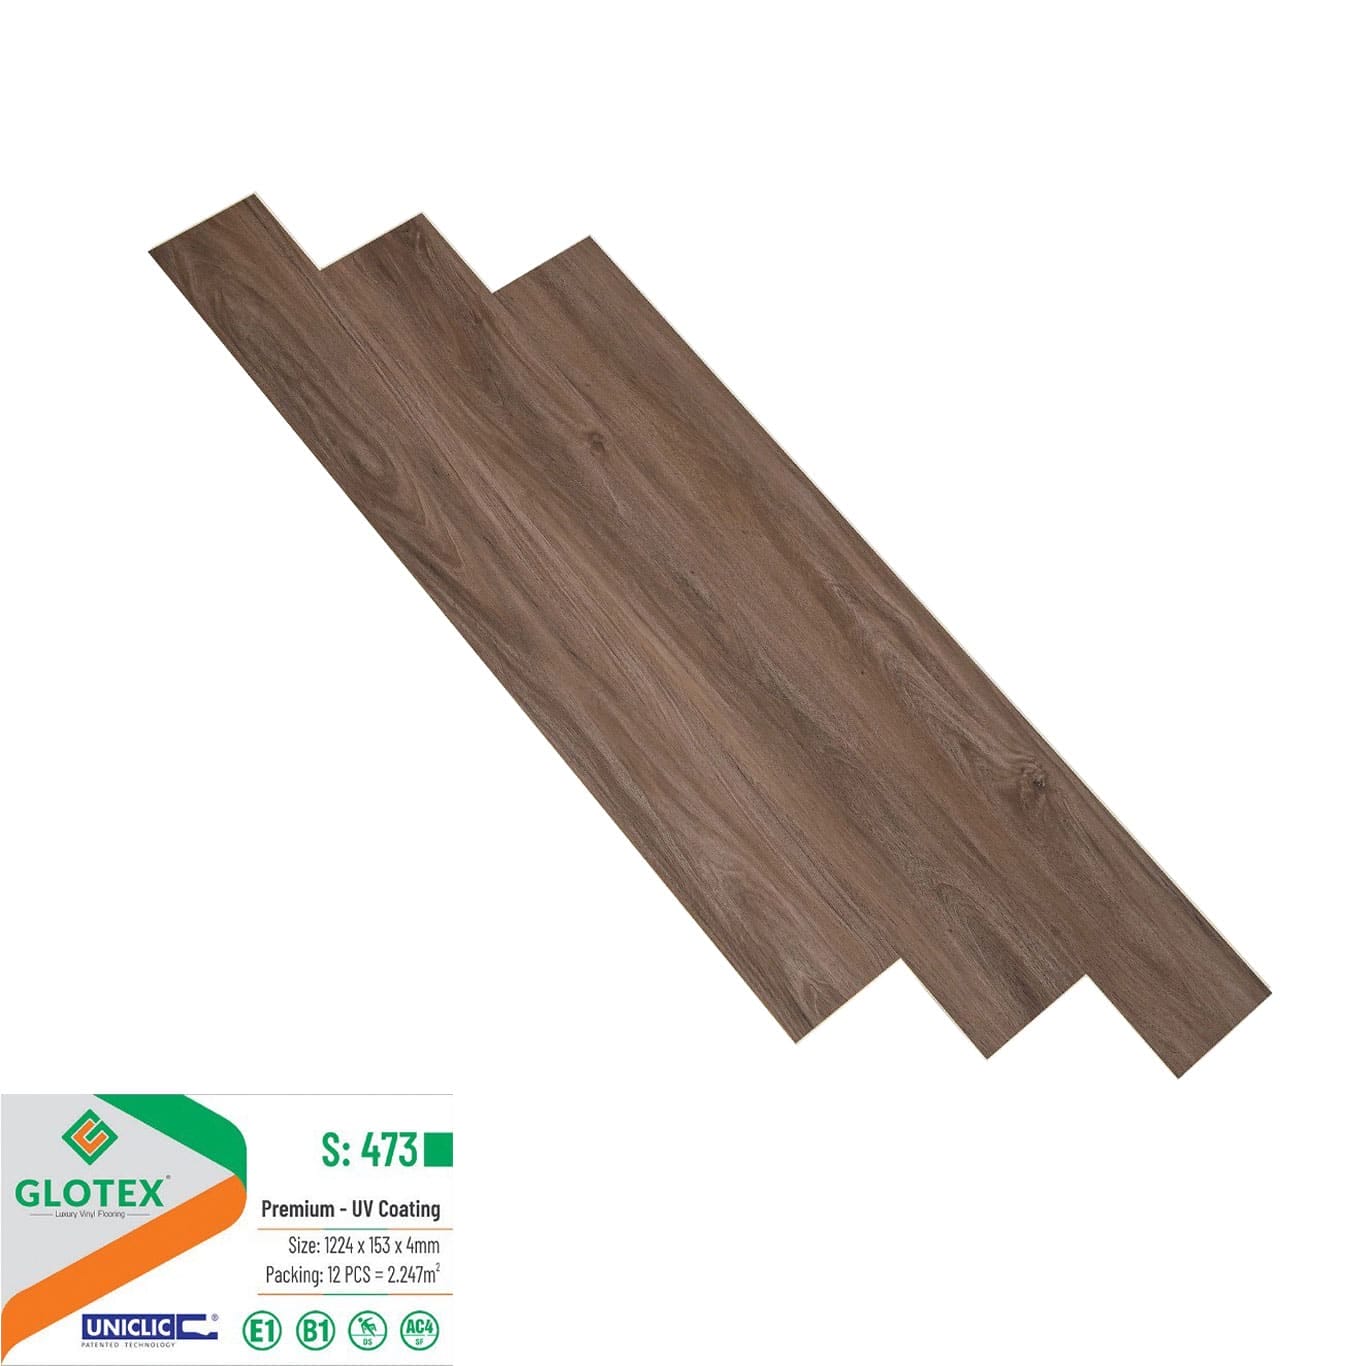 Sàn nhựa giả gỗ Glotex S473